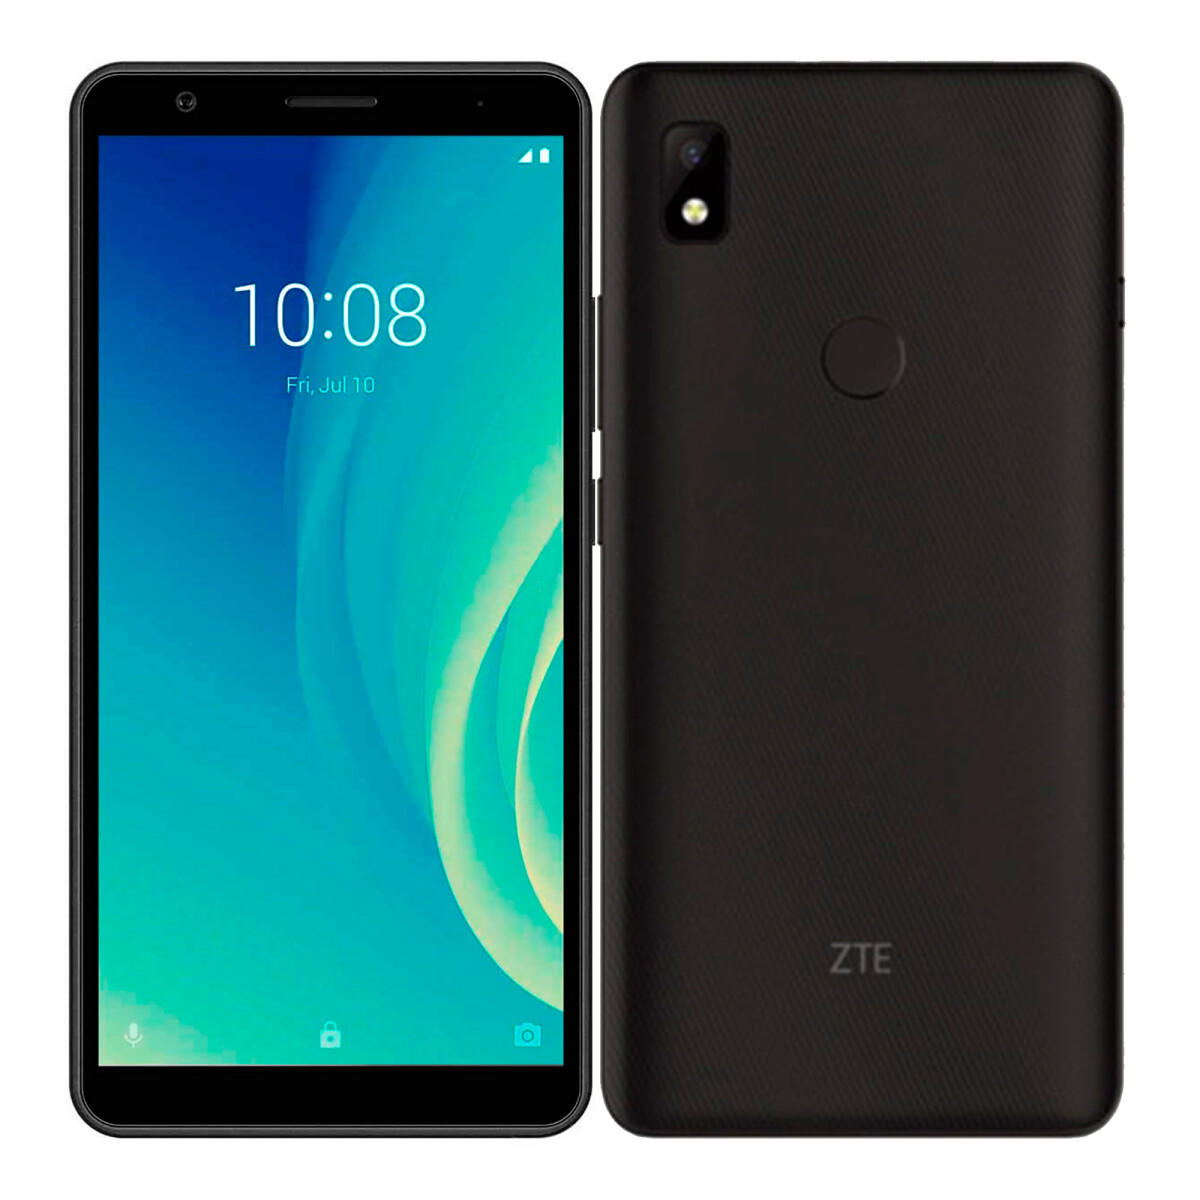 Zte - Smartphone Blade L210 - 6" Multitáctil Fwvga. Dualsim. 2G. 3G. Quad Core. Android. Ram 1GB / R - 001 